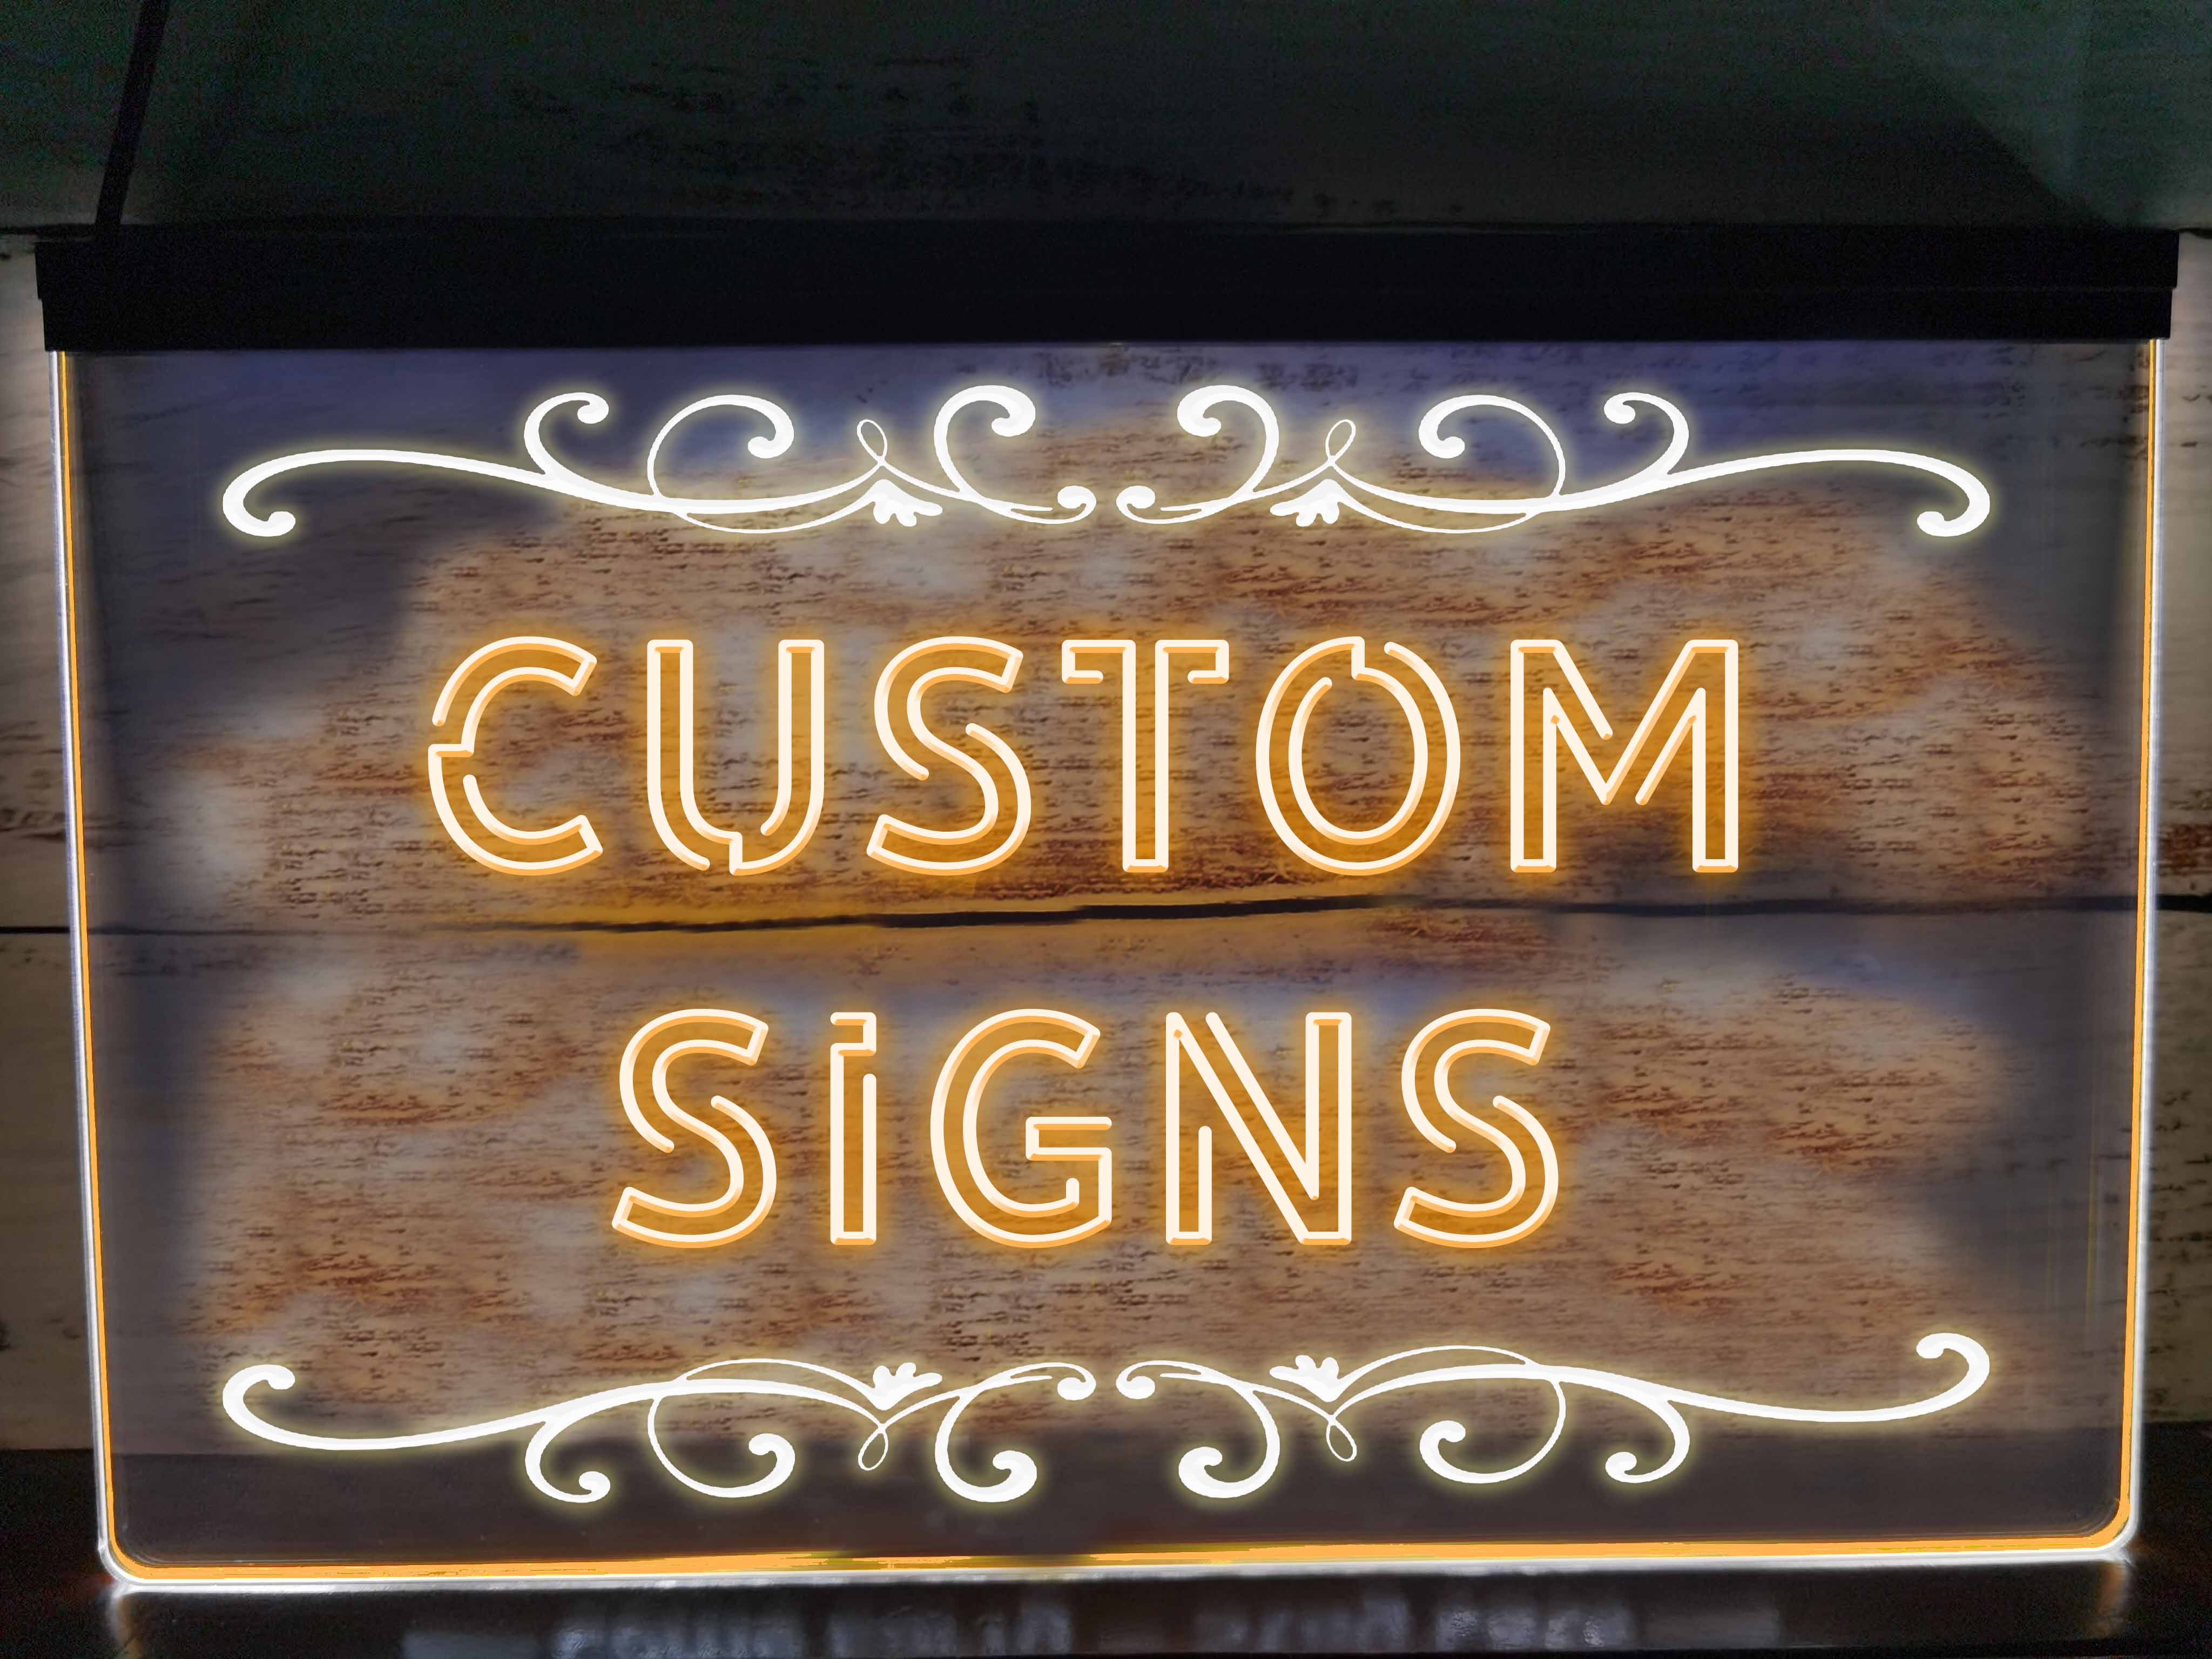 Custom LED Neon Sign : design a unique piece